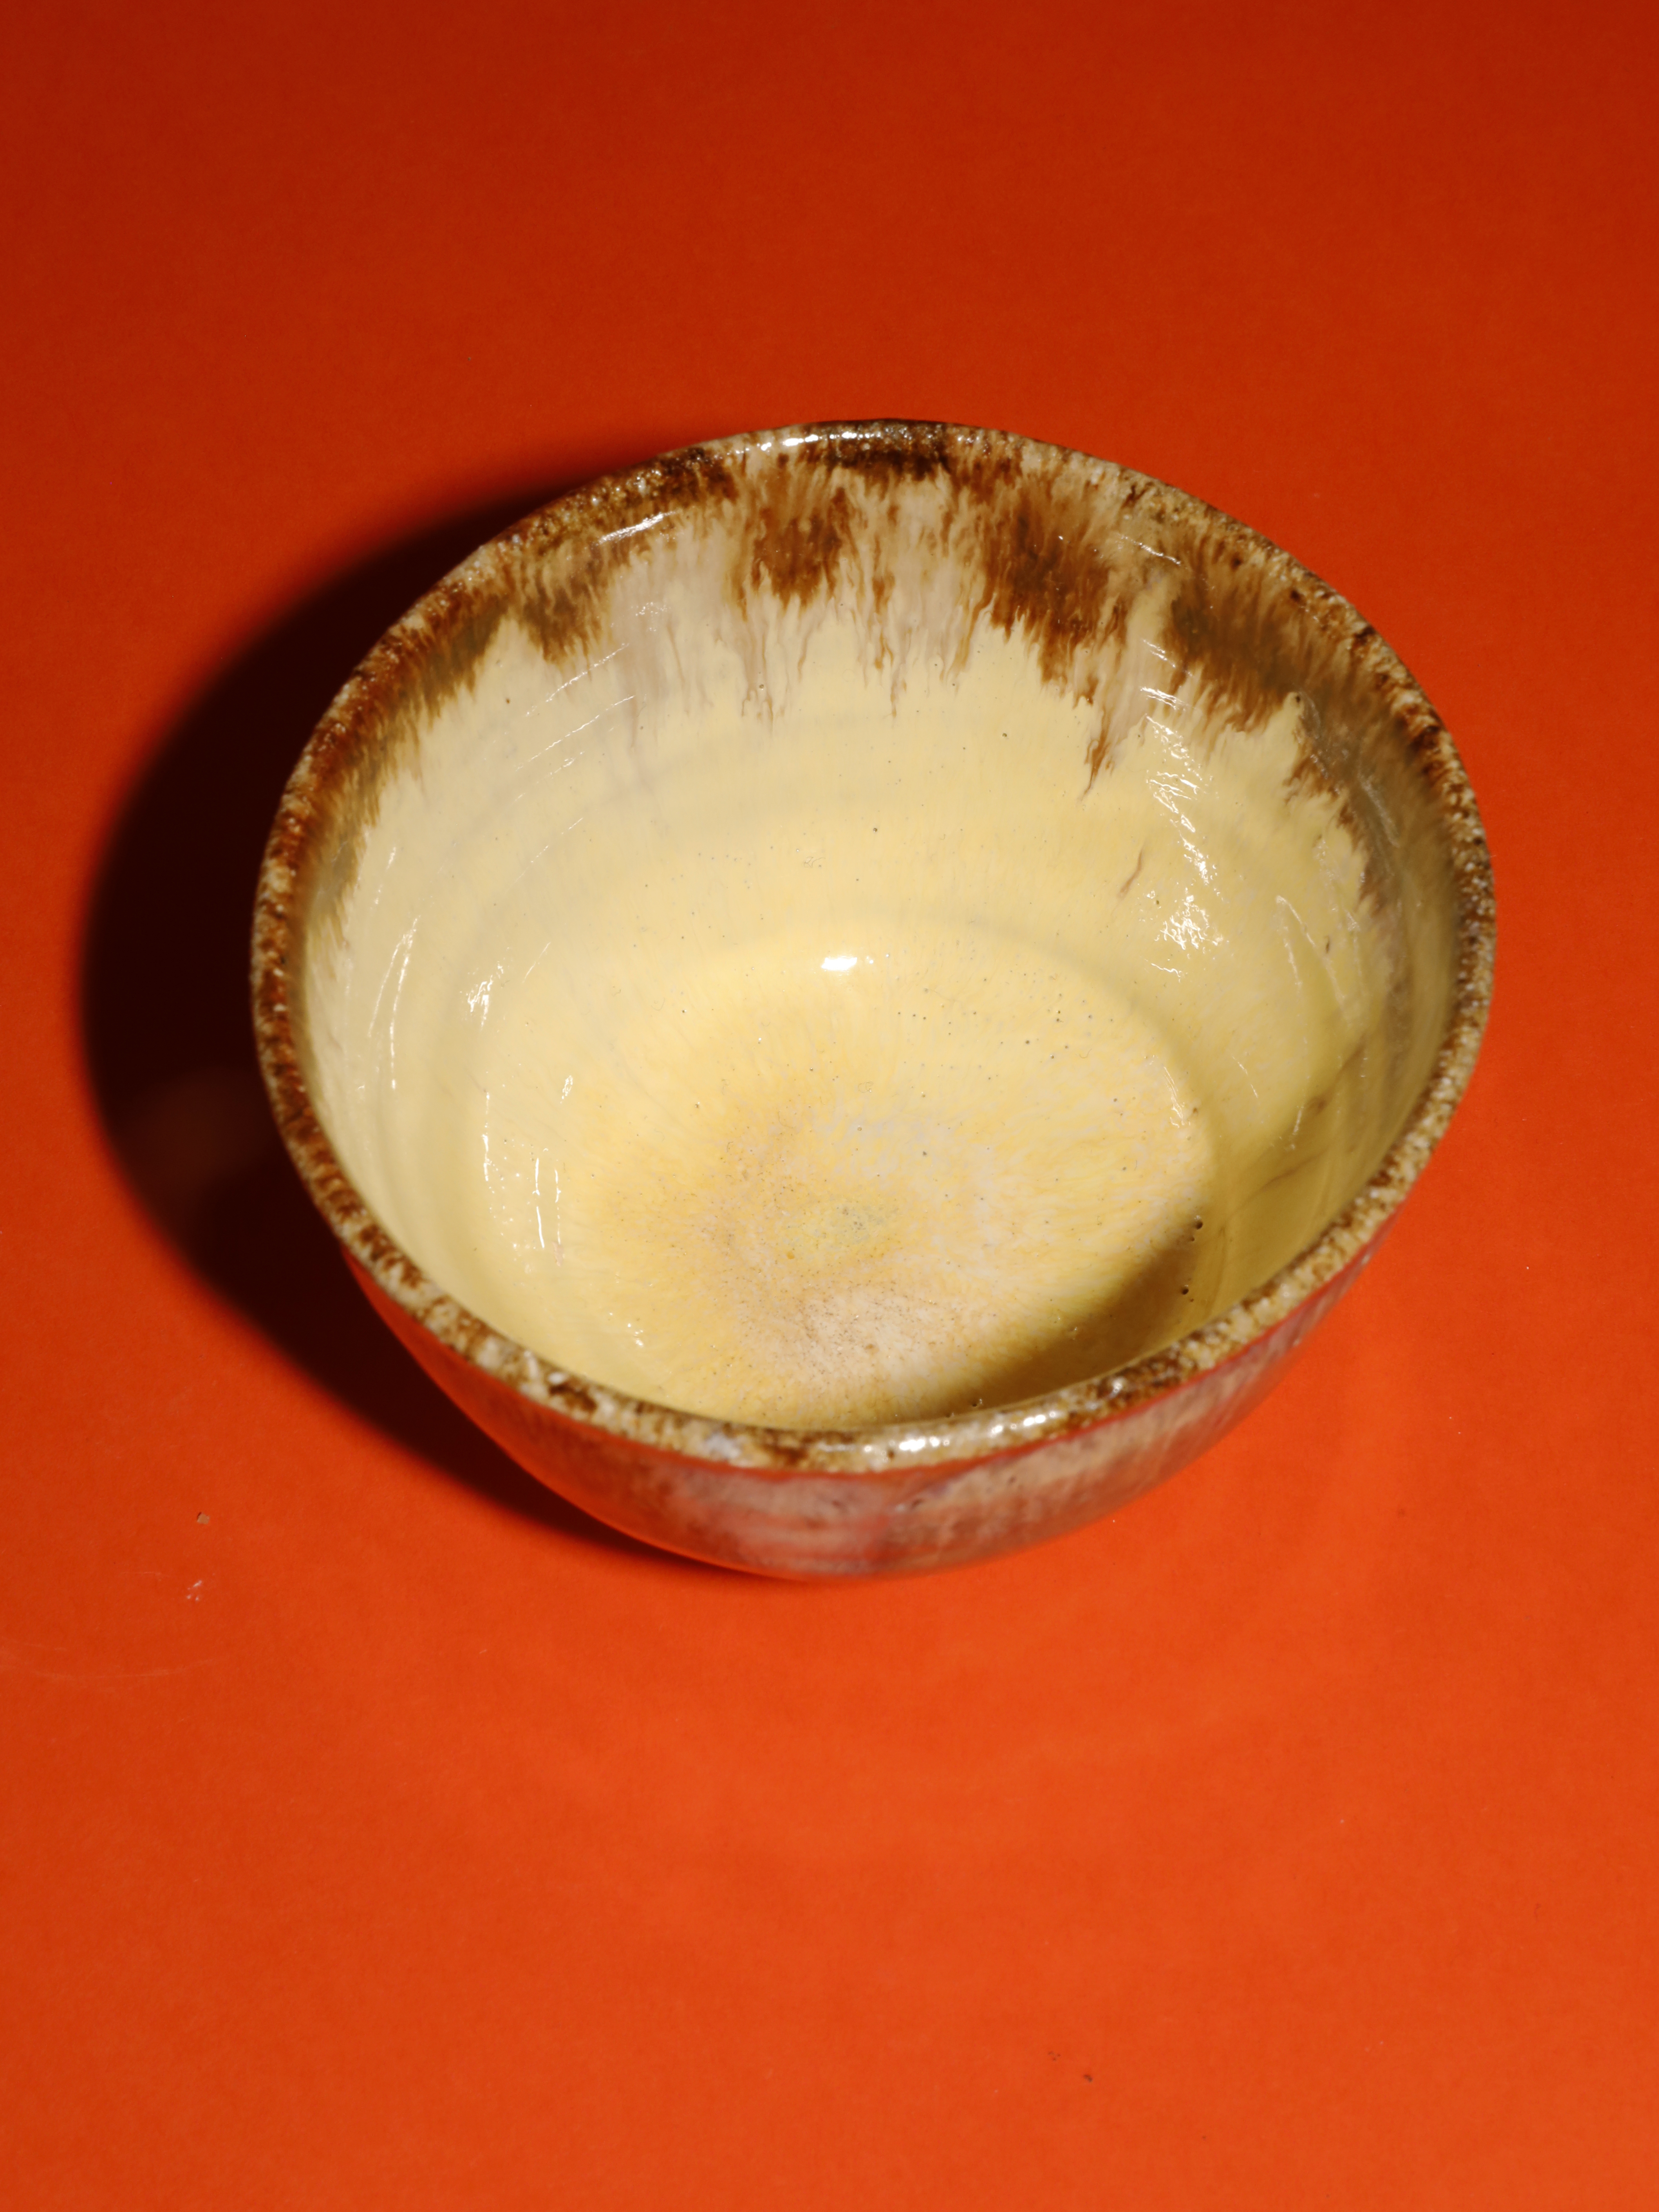 Ovelia Transtoto - 'Glazed bowl' #2